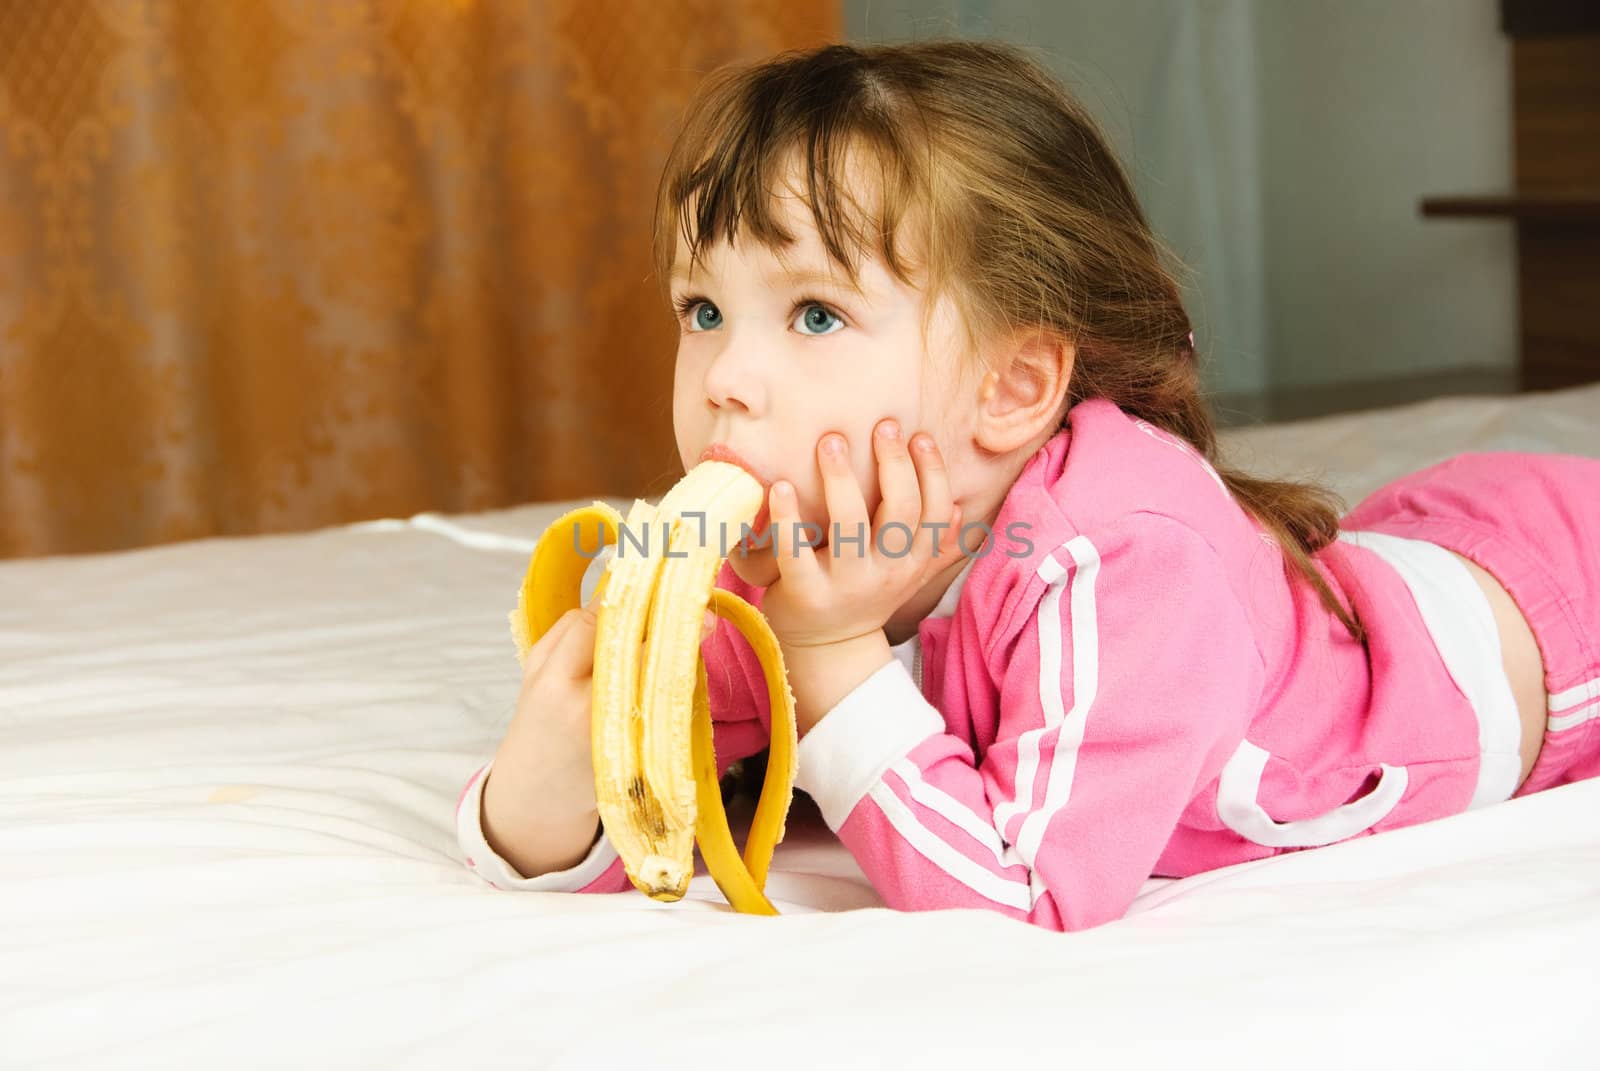 little girl eating a banana by lanak